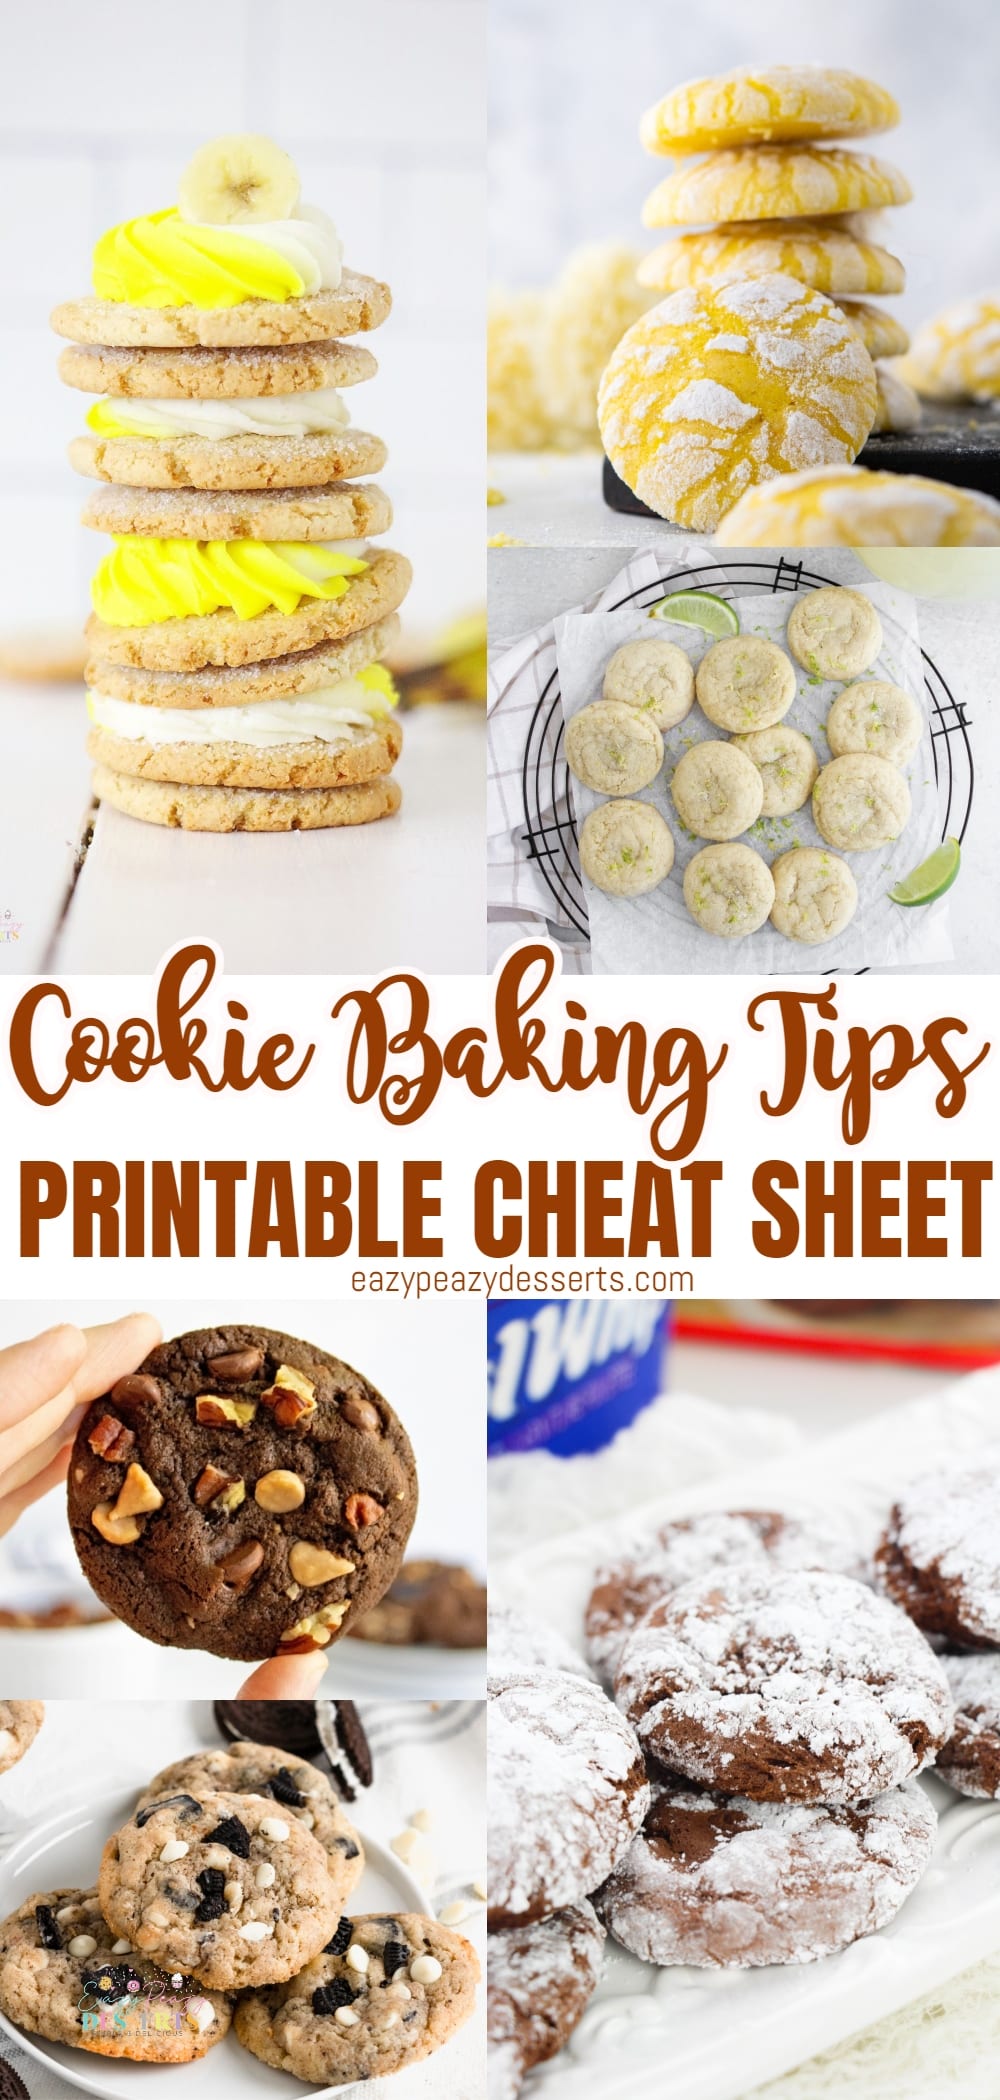 Cookie baking tips